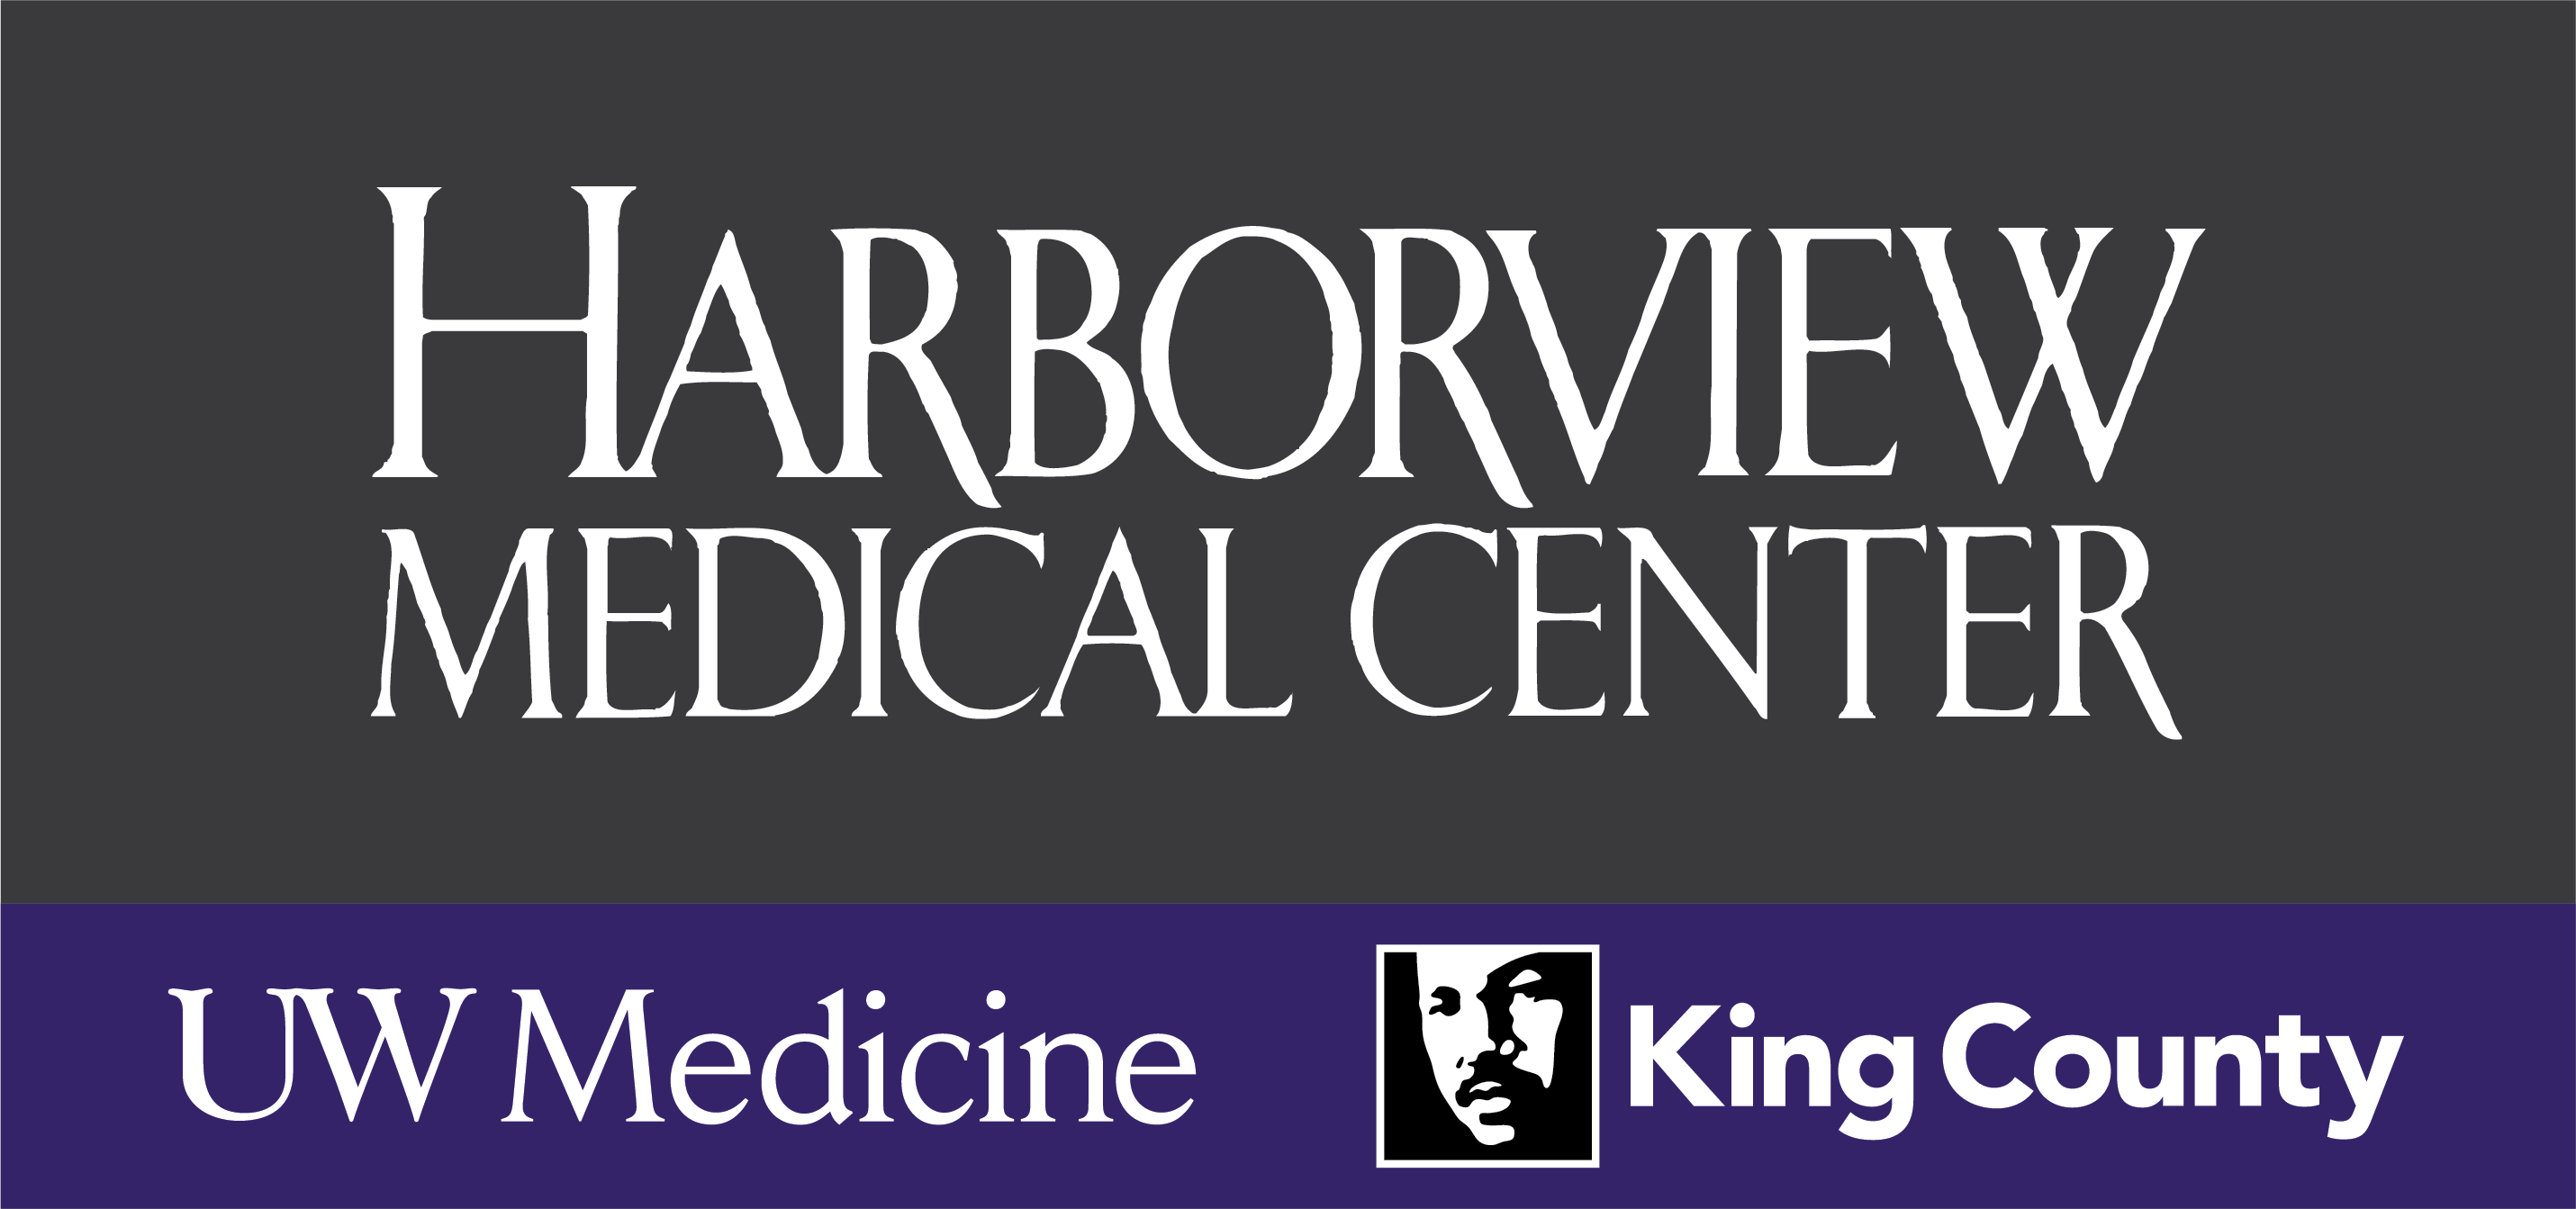 Harborview Medical Center, UW Medicine and King County logo lockup